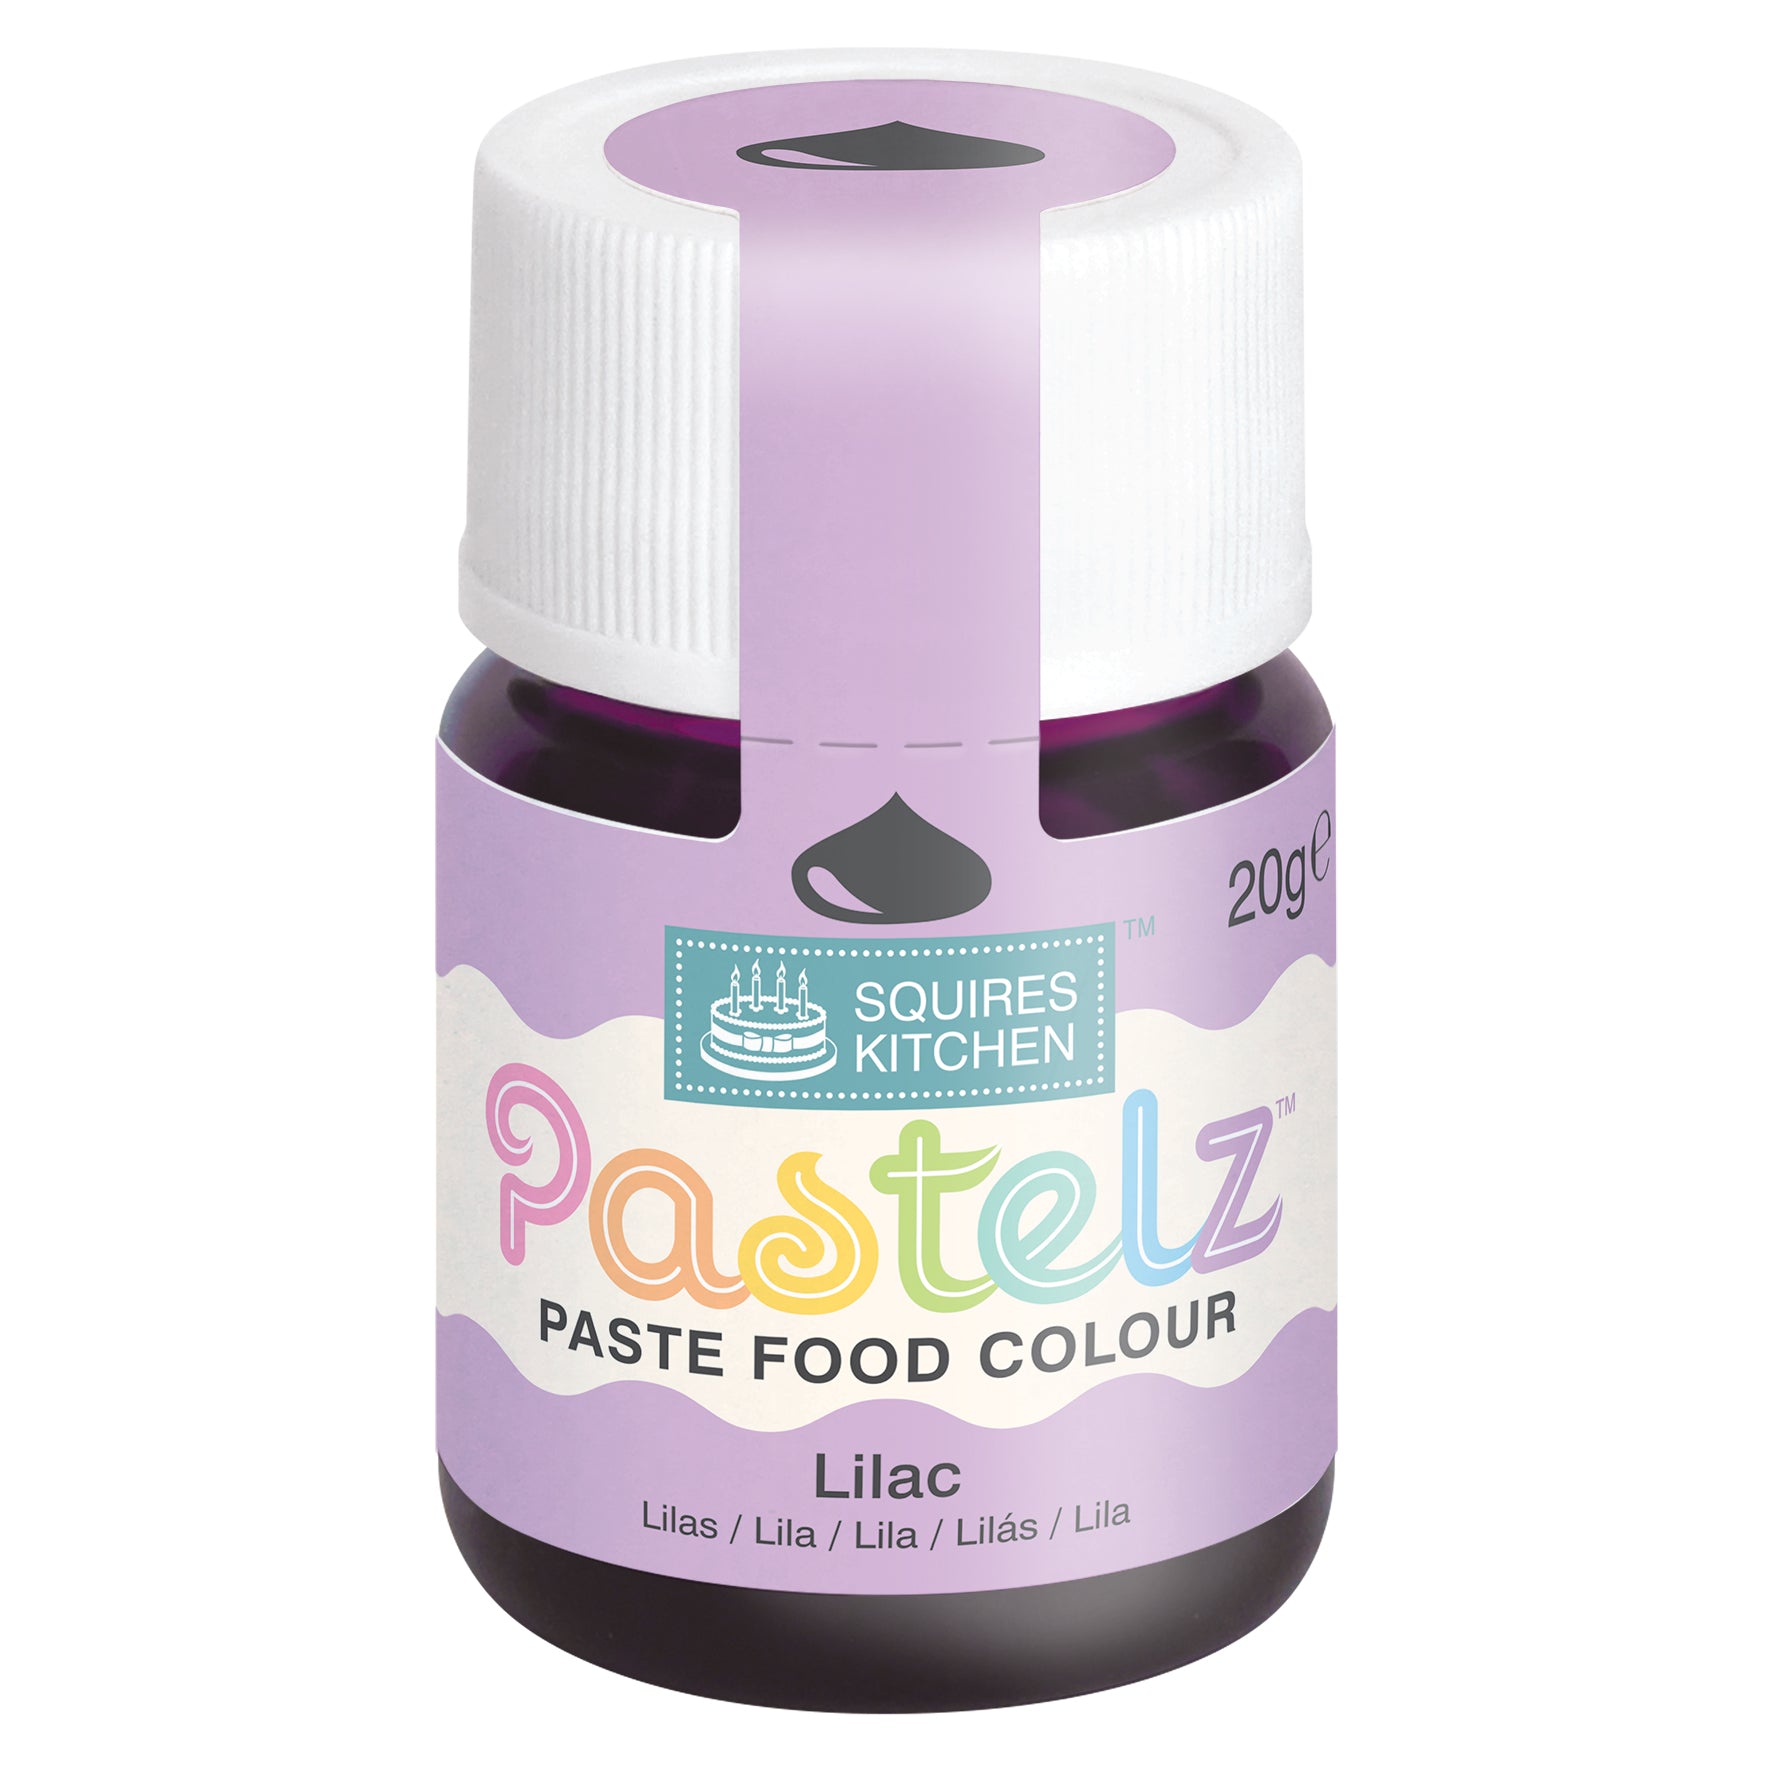 PASTELZ - Pastel Food Colouring Pastes